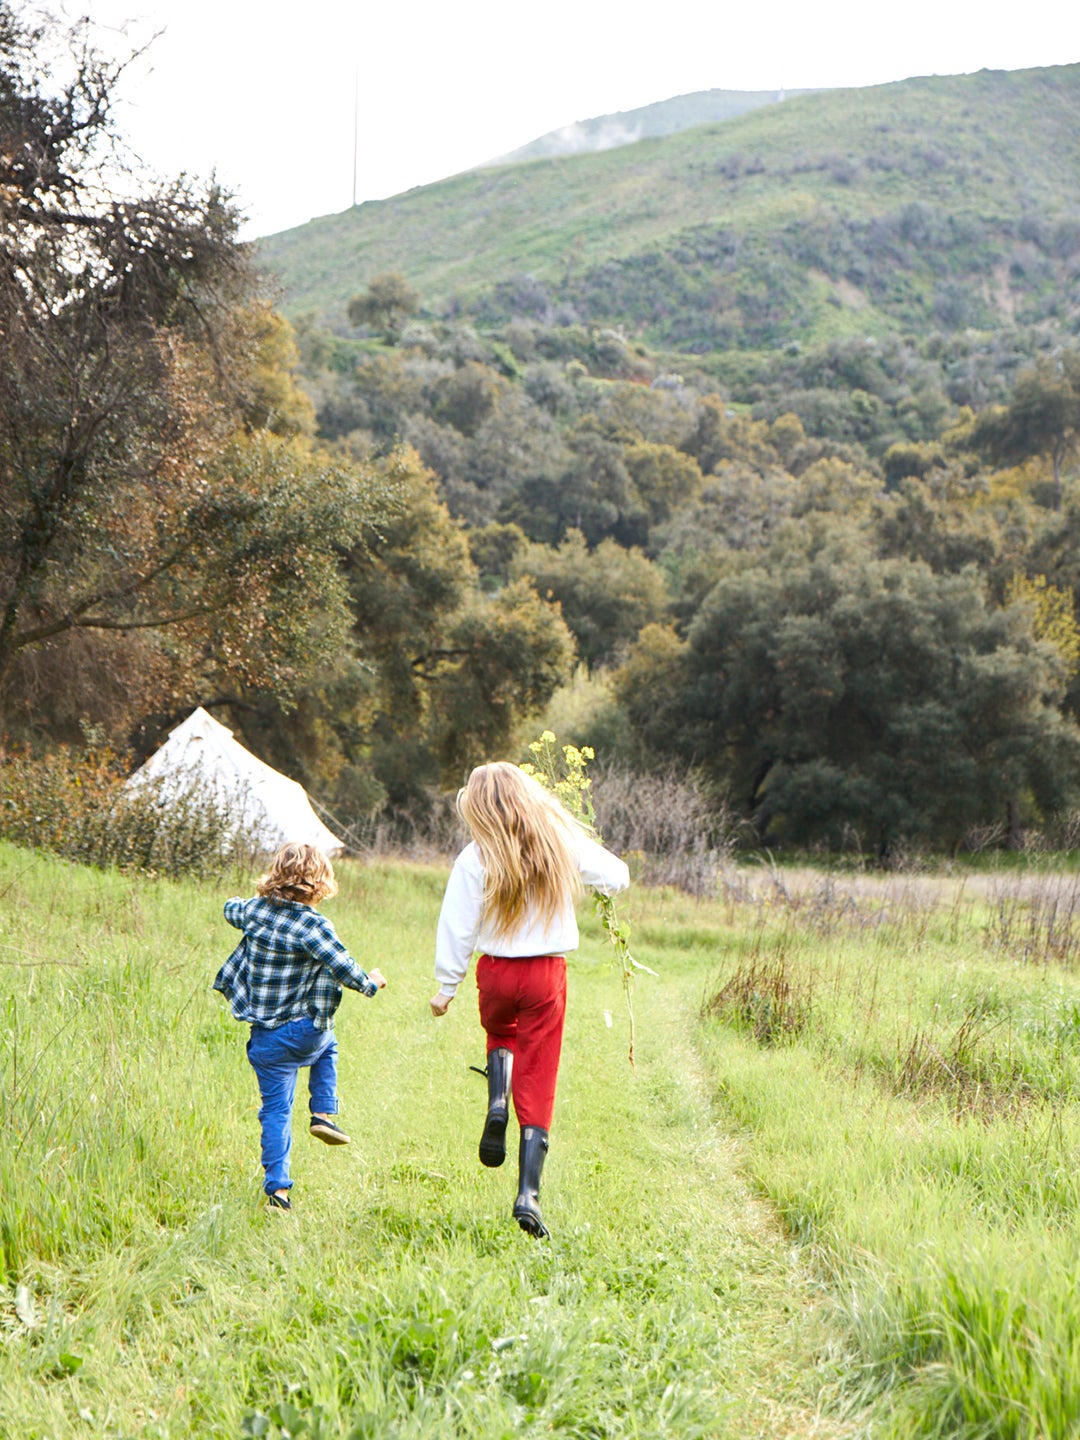 Two kids skipping in a field.